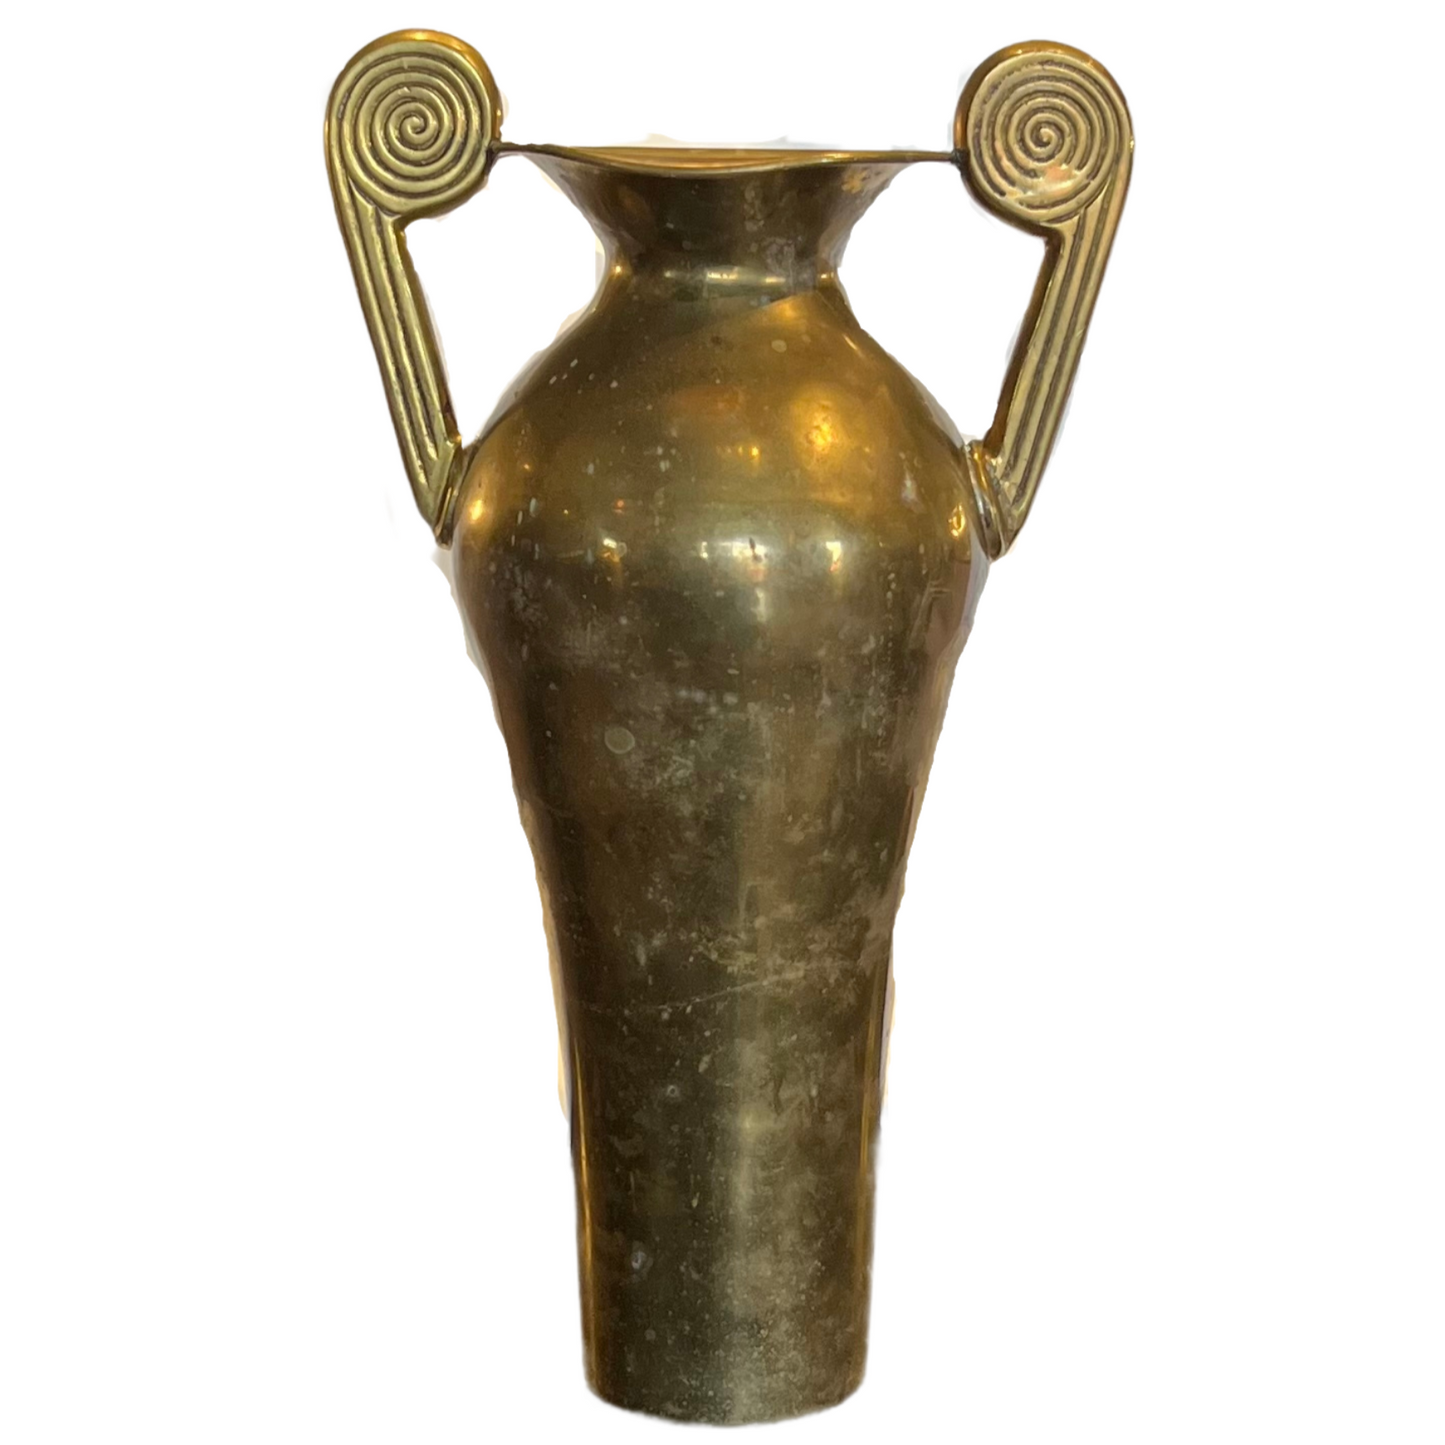 Bronze Vase with Spiral Design Handles